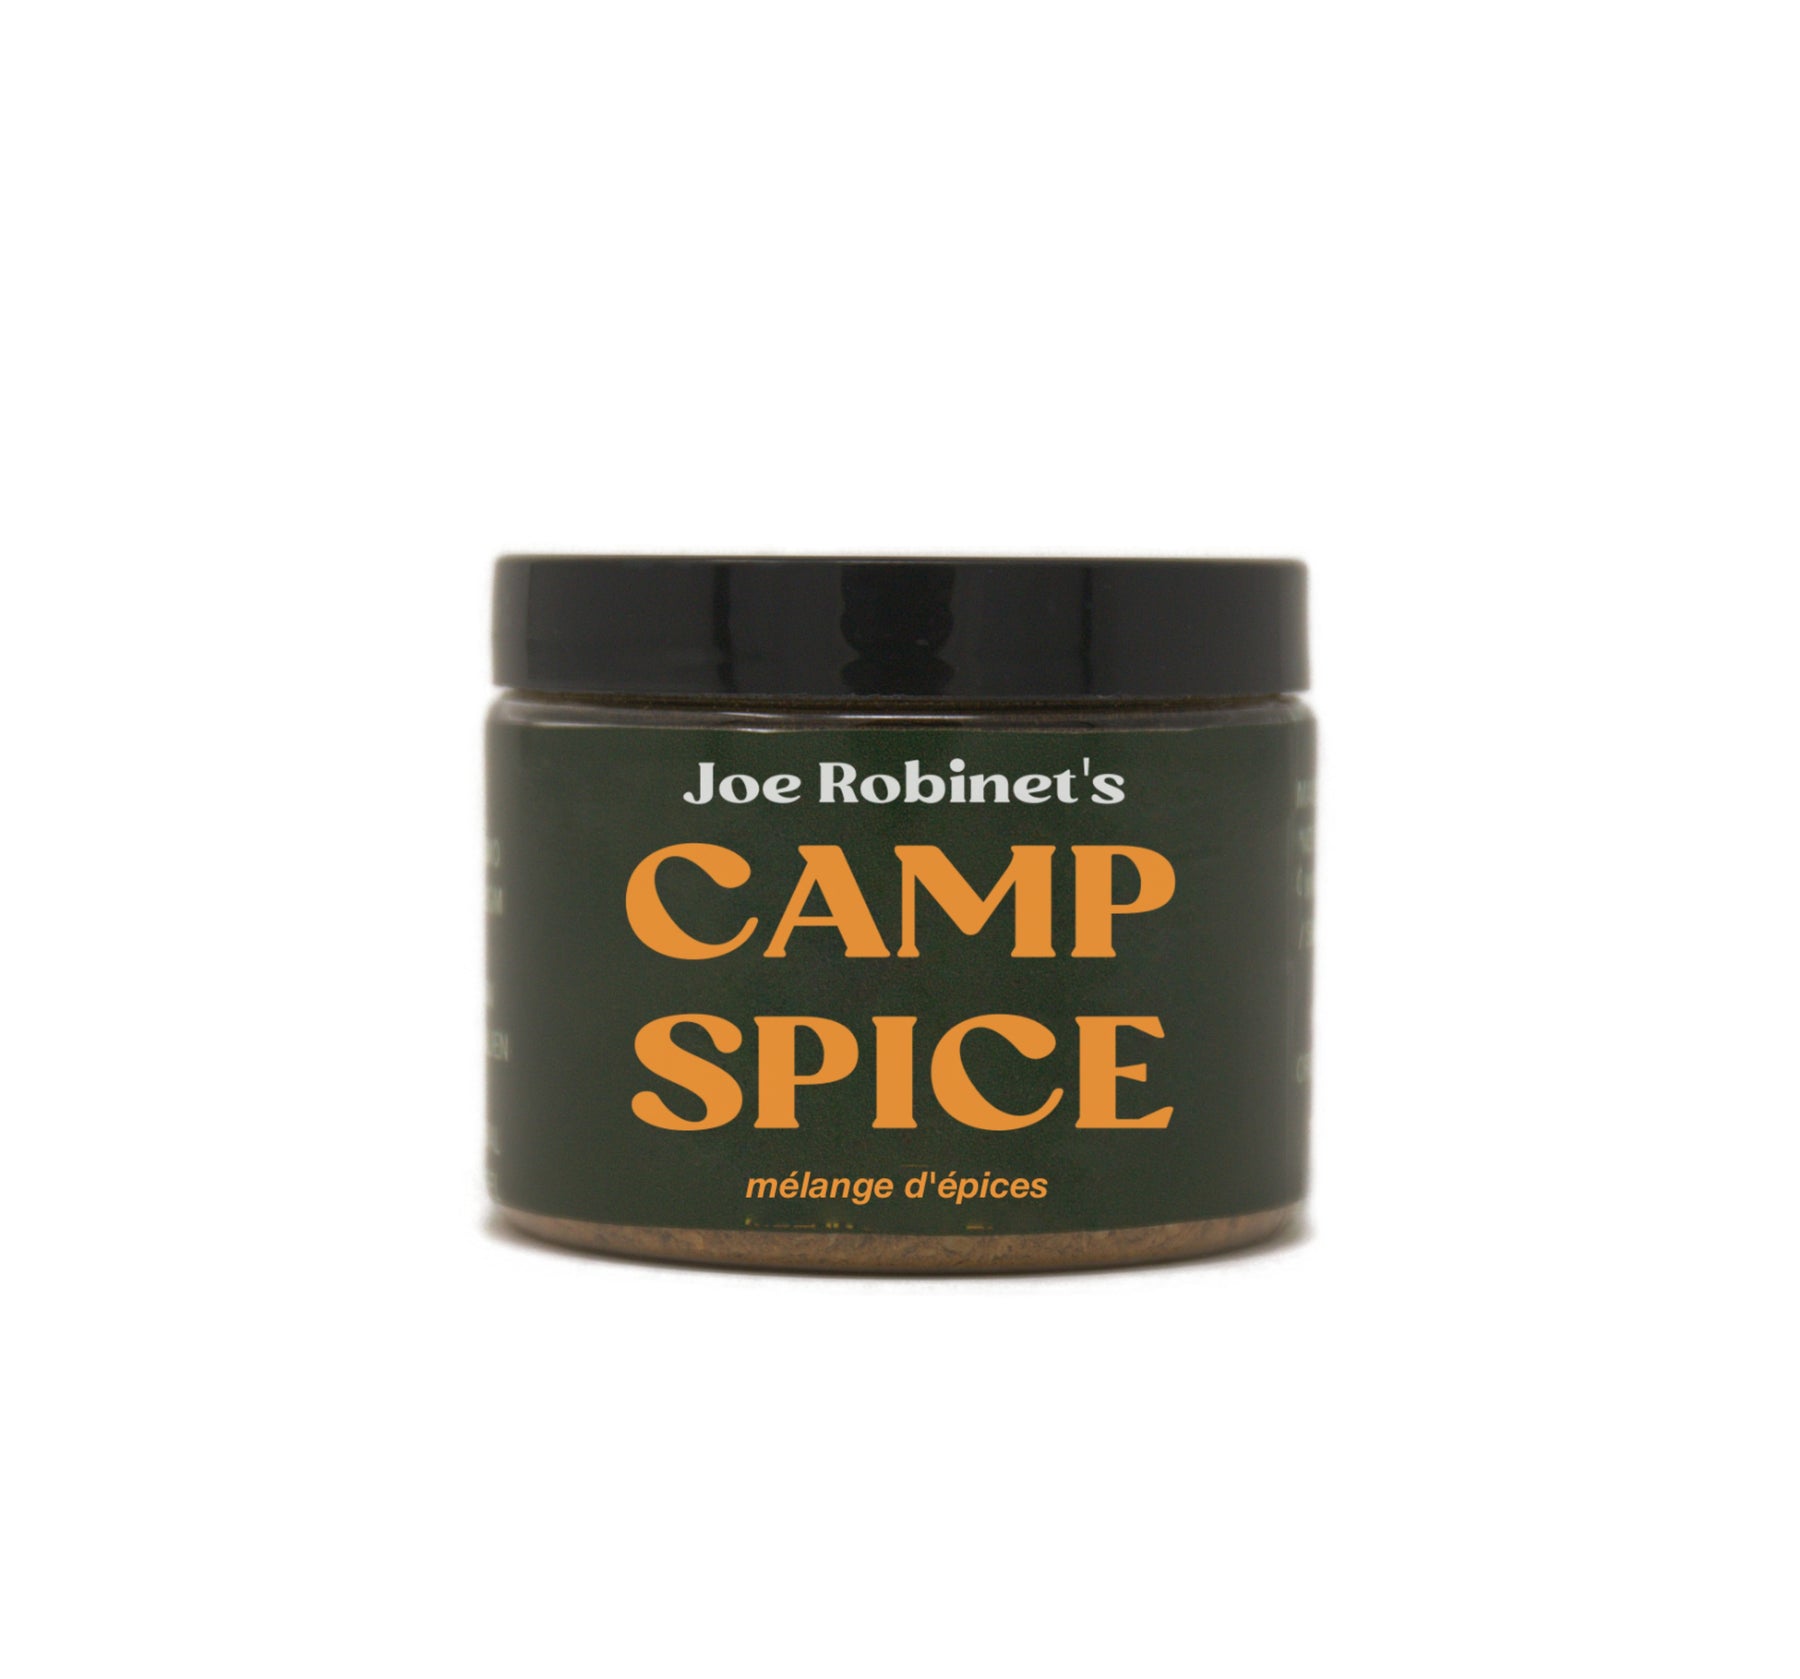 Joe Robinet's Camp Spice